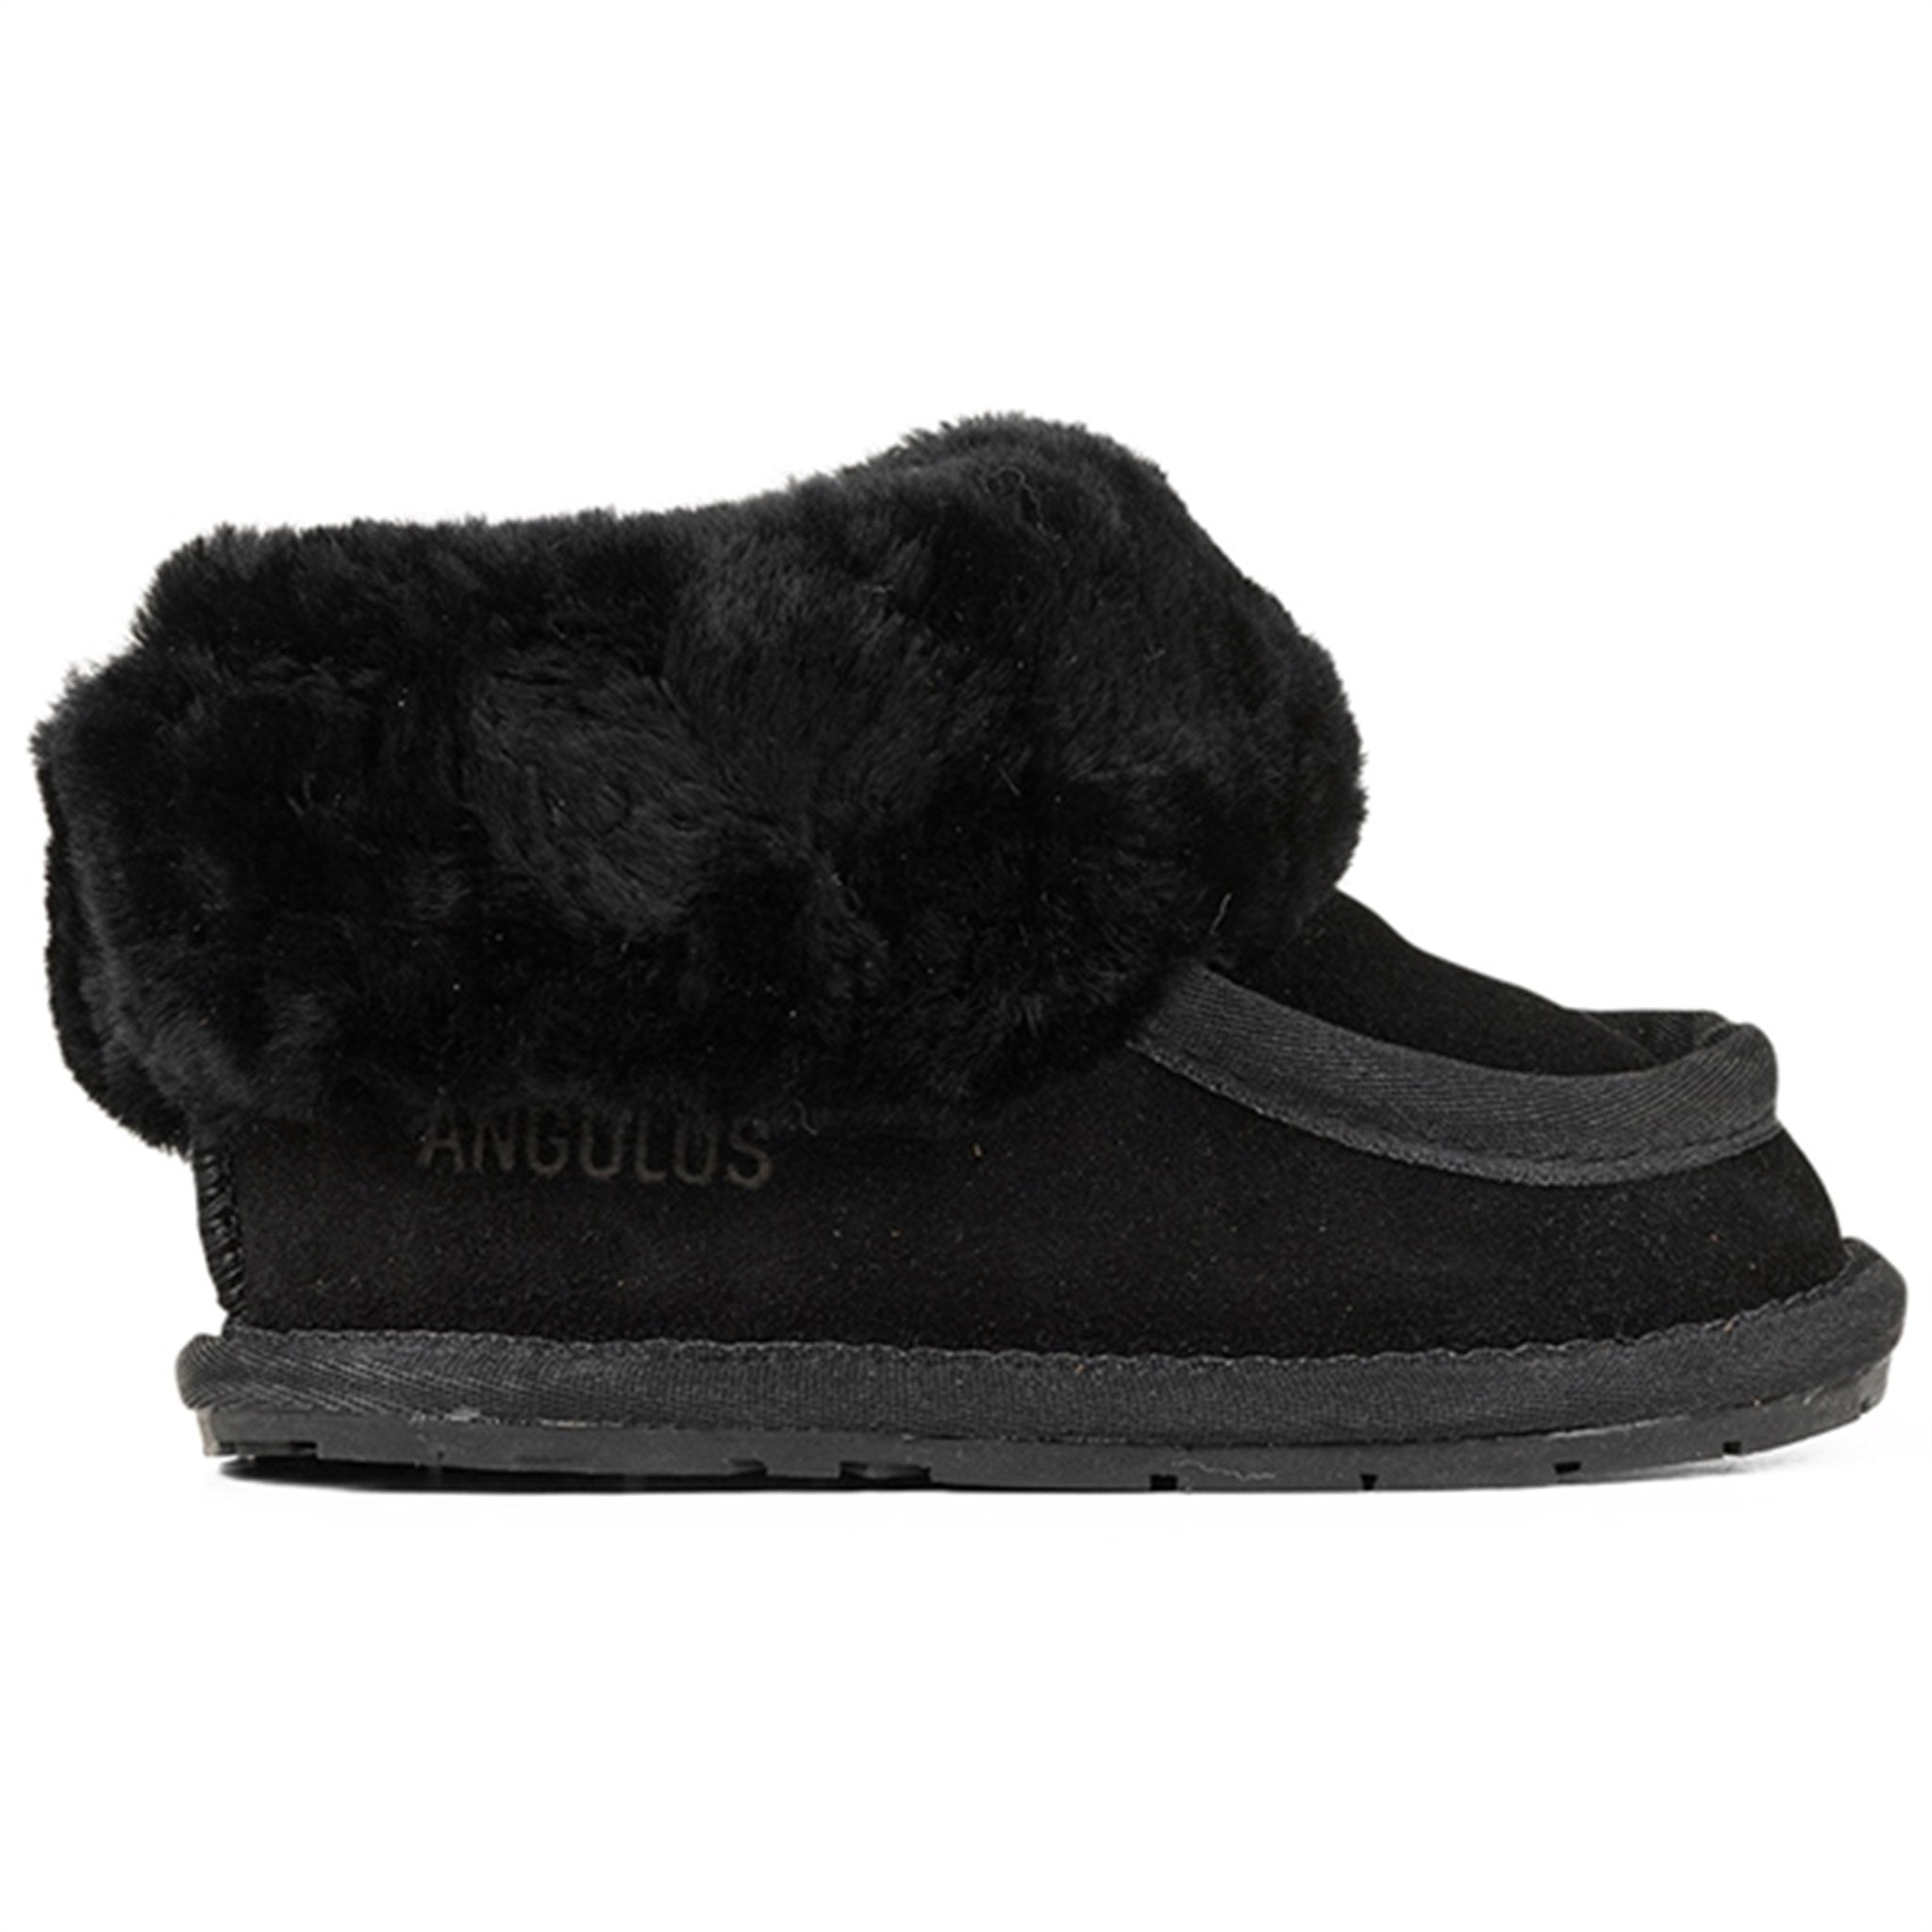 Angulus Lambswool Indoor Shoes Black 2